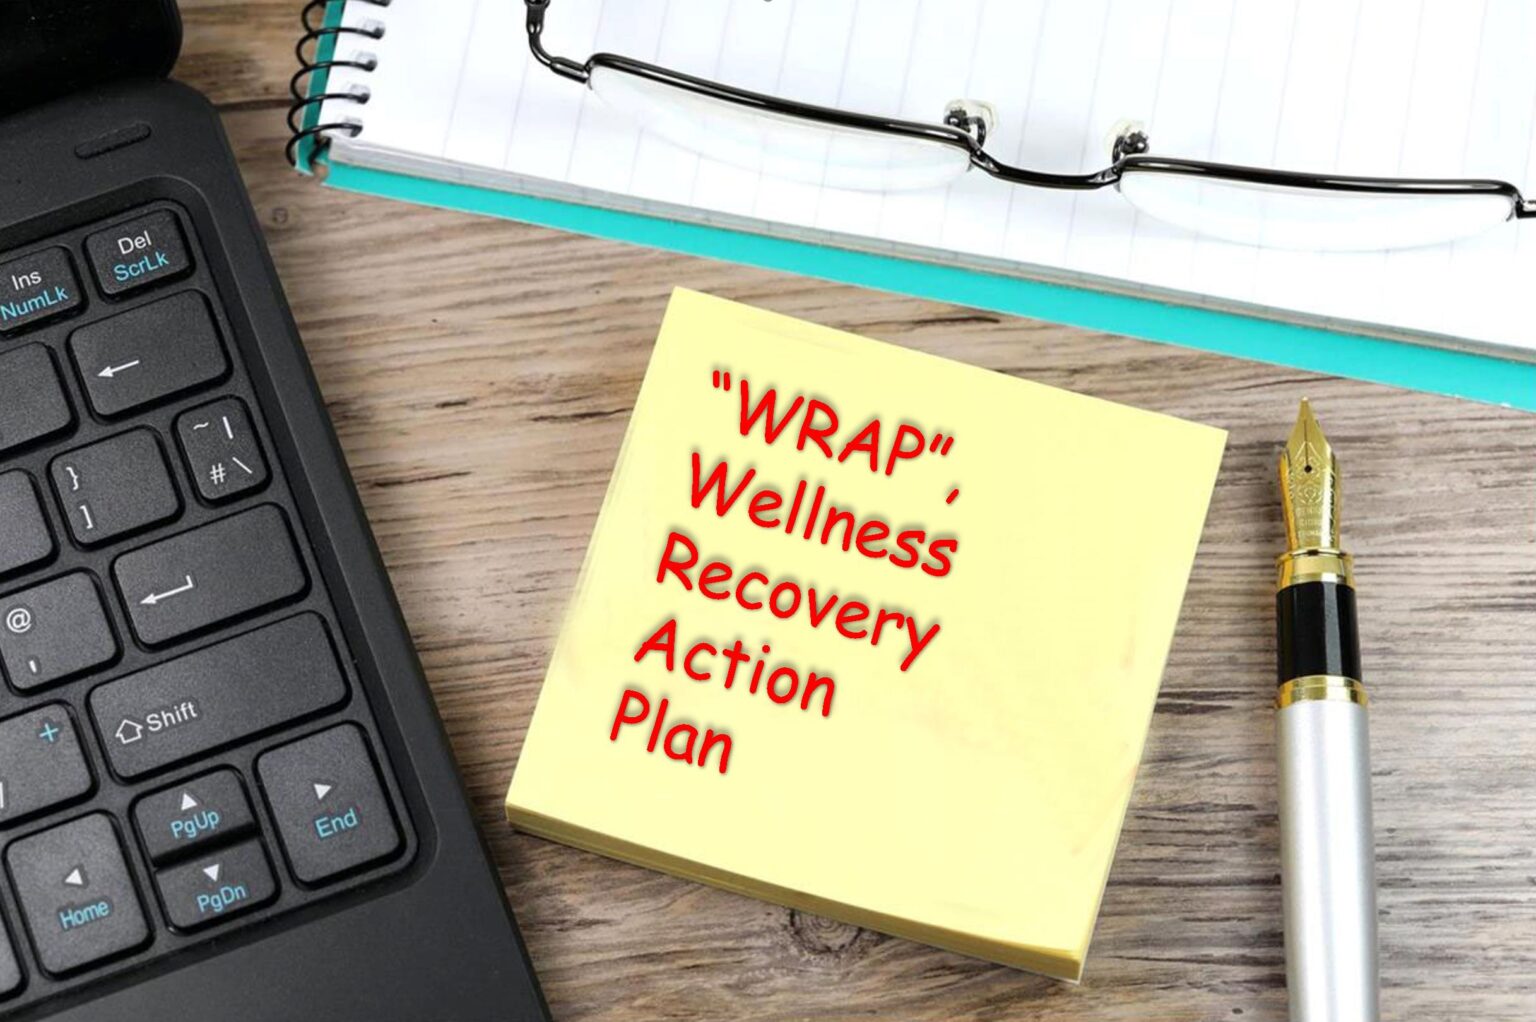 cursus-wrap-wellness-recovery-action-plan-prometheus8472-nl